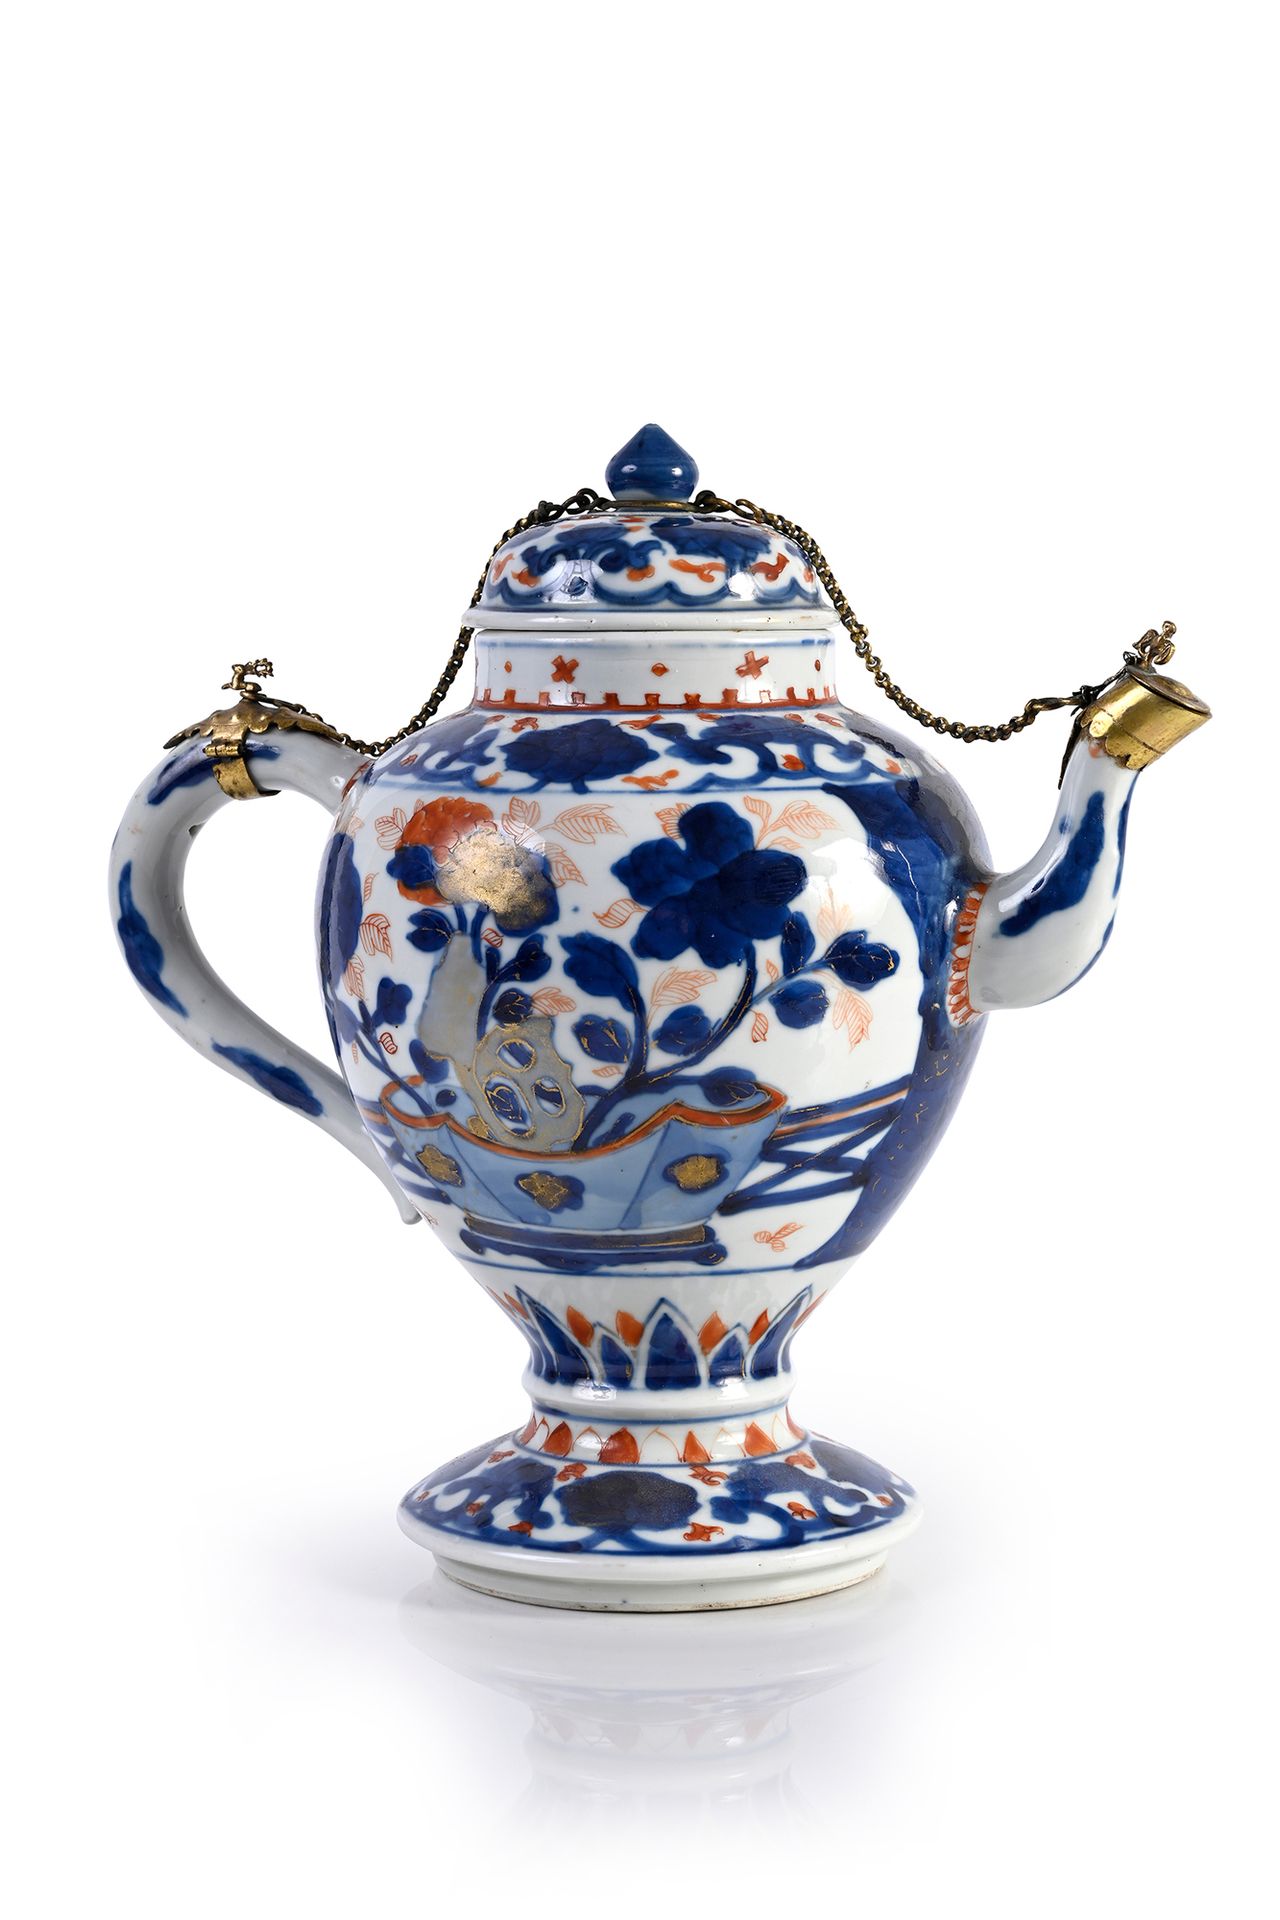 CHINE, XVIIIe siècle* 伊万里瓷器茶壶
安装在一个高脚上，用钴蓝，铁红和黄金装饰的花盆，有镀金的金属框架。
高度：34厘米